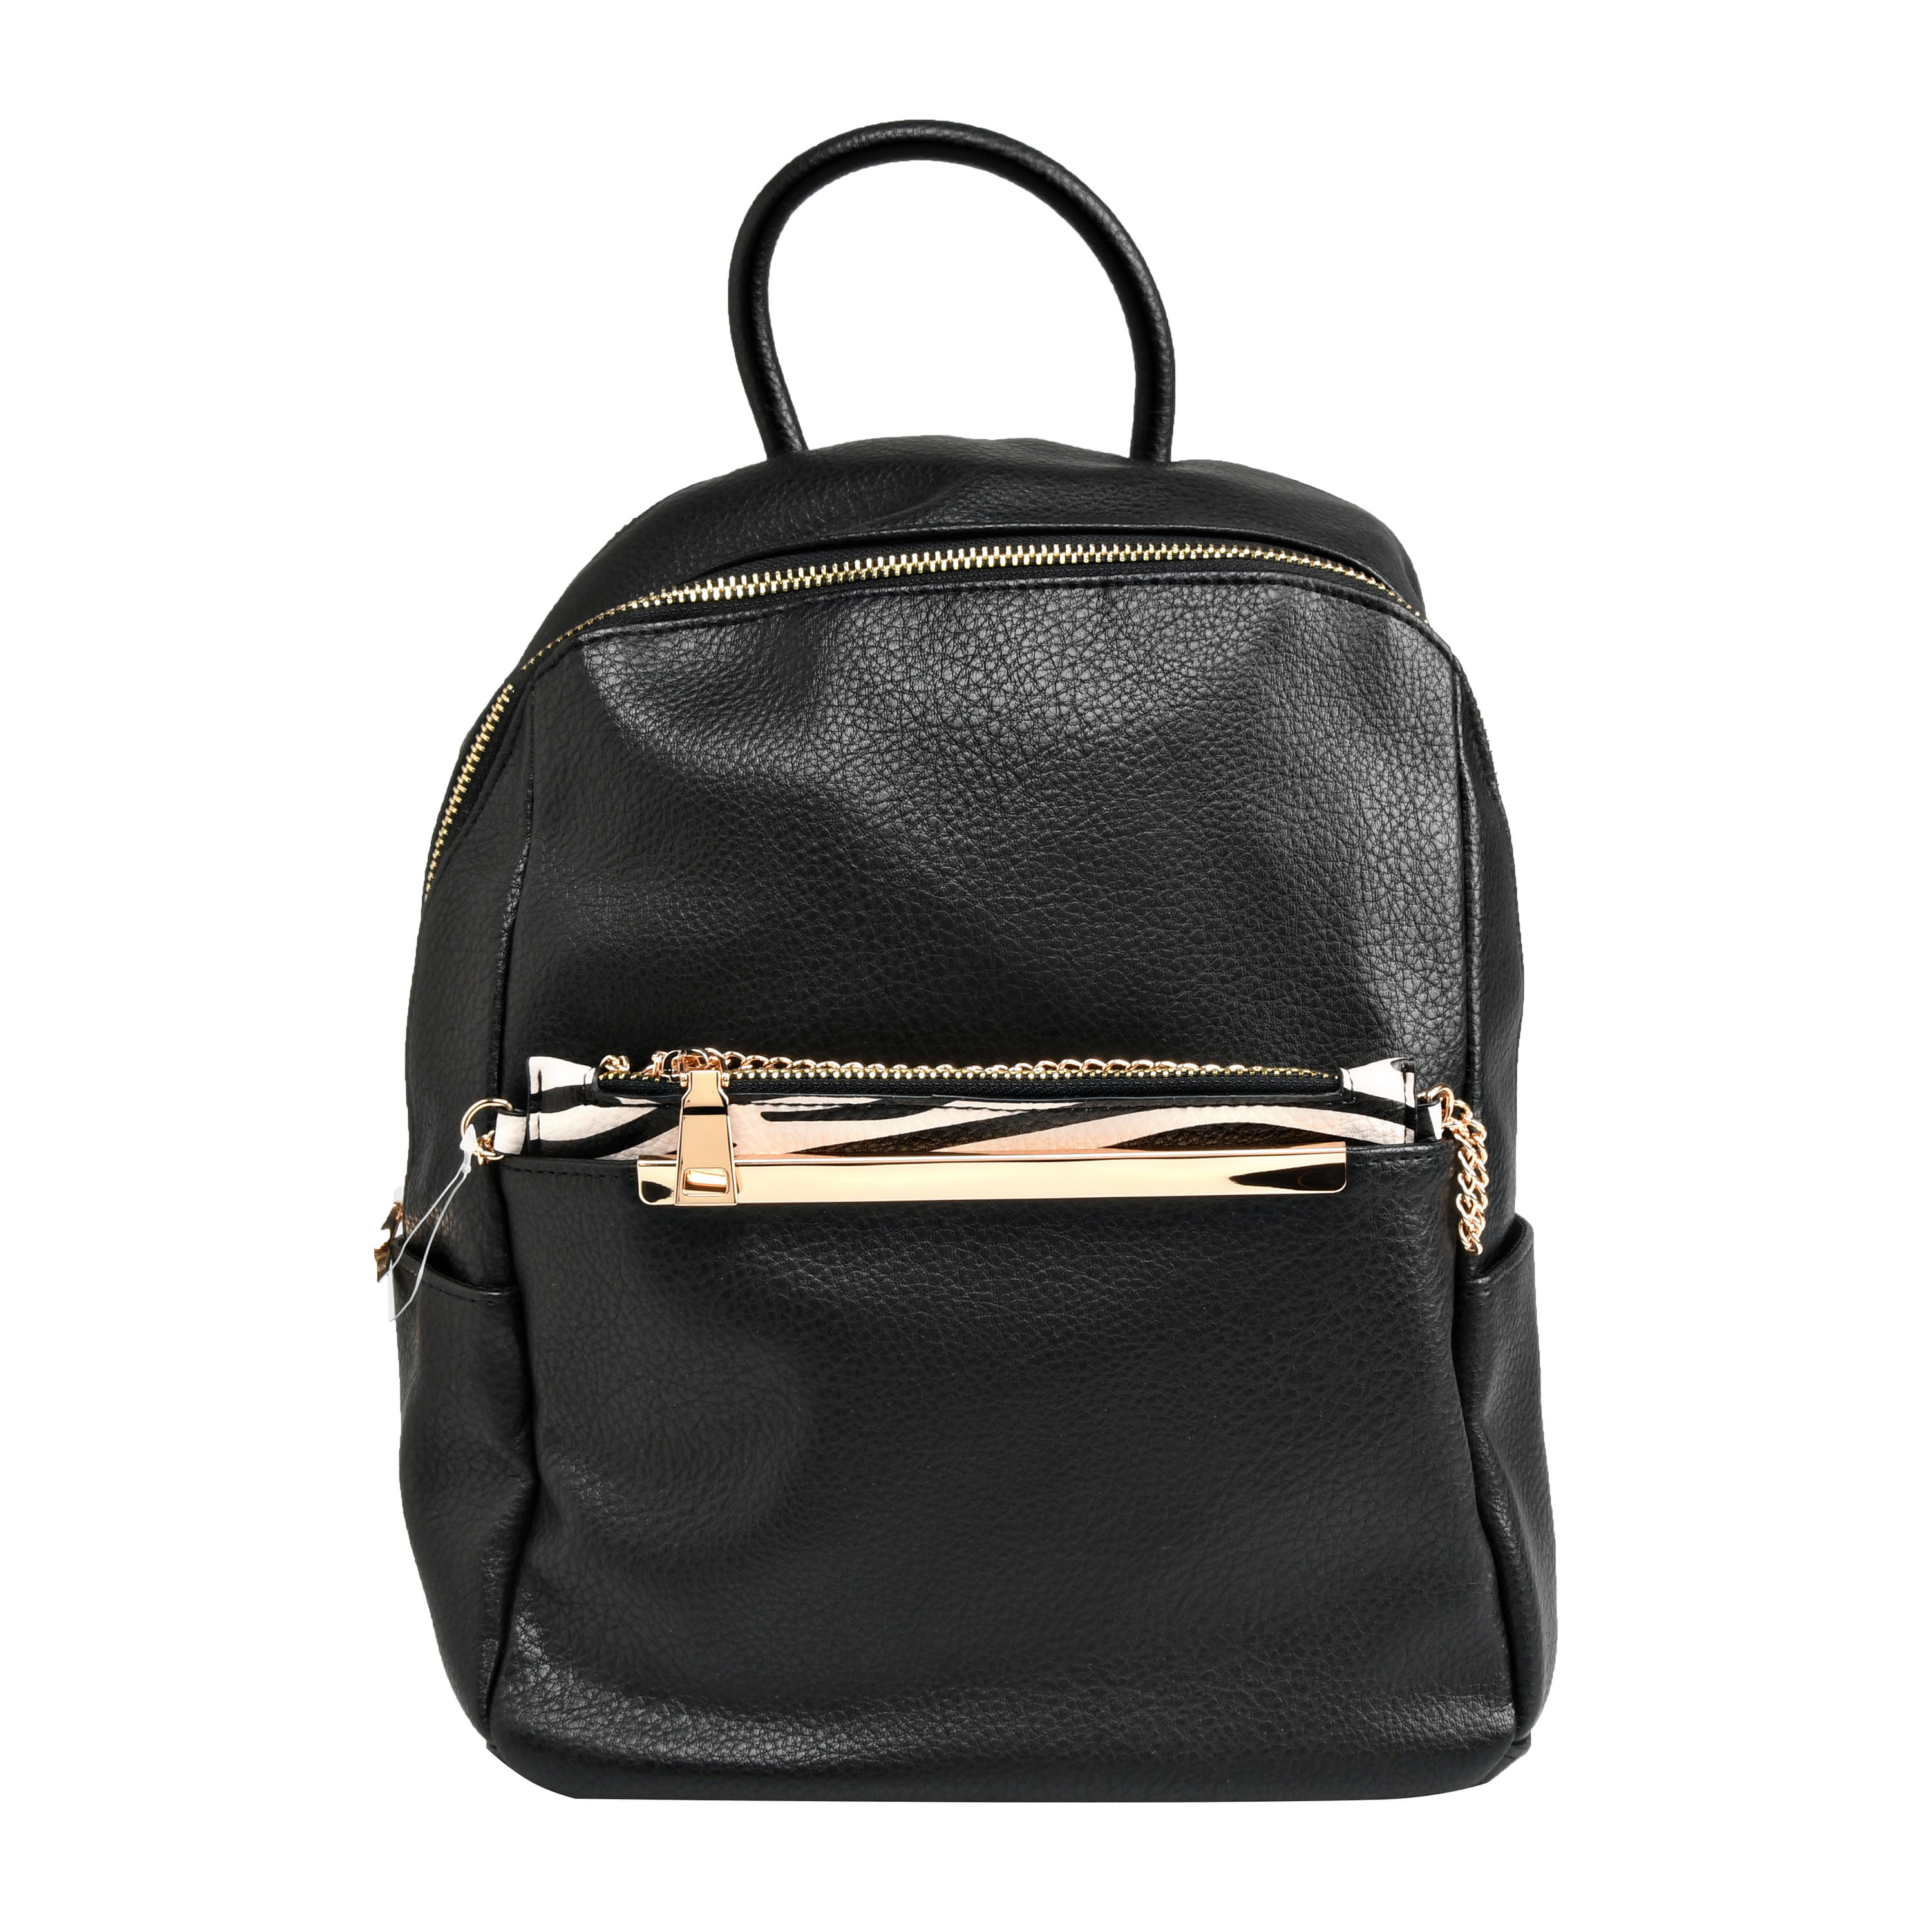 SWEET-YZ Ethnic Feathers Pattern Adults Backpack Bookbag Travel Back Pack Laptop Bag Shoulders Bag 